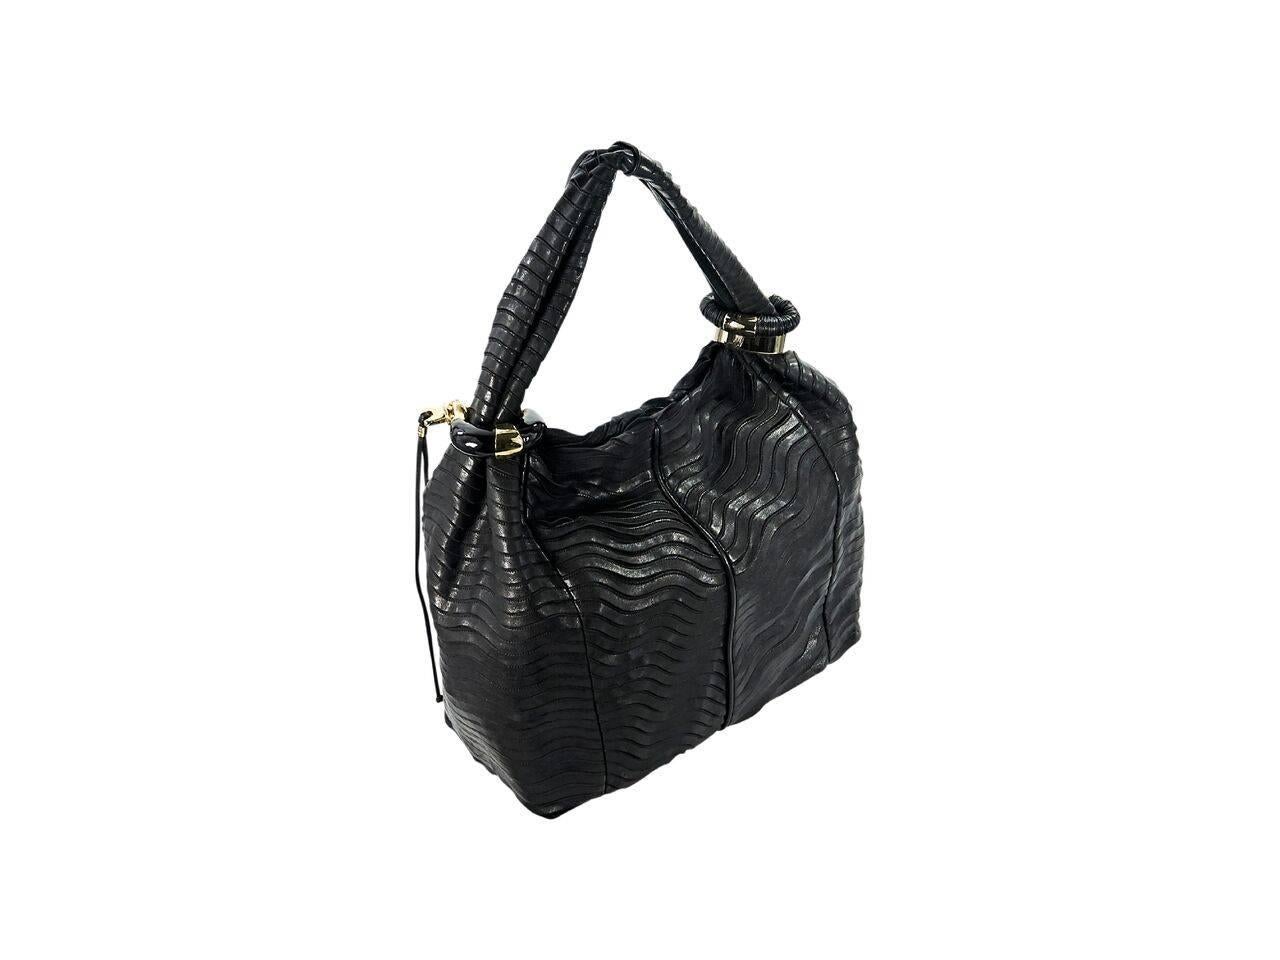 Product details:  Black leather Saba hobo bag by Jimmy Choo.  Single shoulder strap.  Magnetic snap closure.  Lined interior with inner zip and slide pockets.  Goldtone hardware.  16